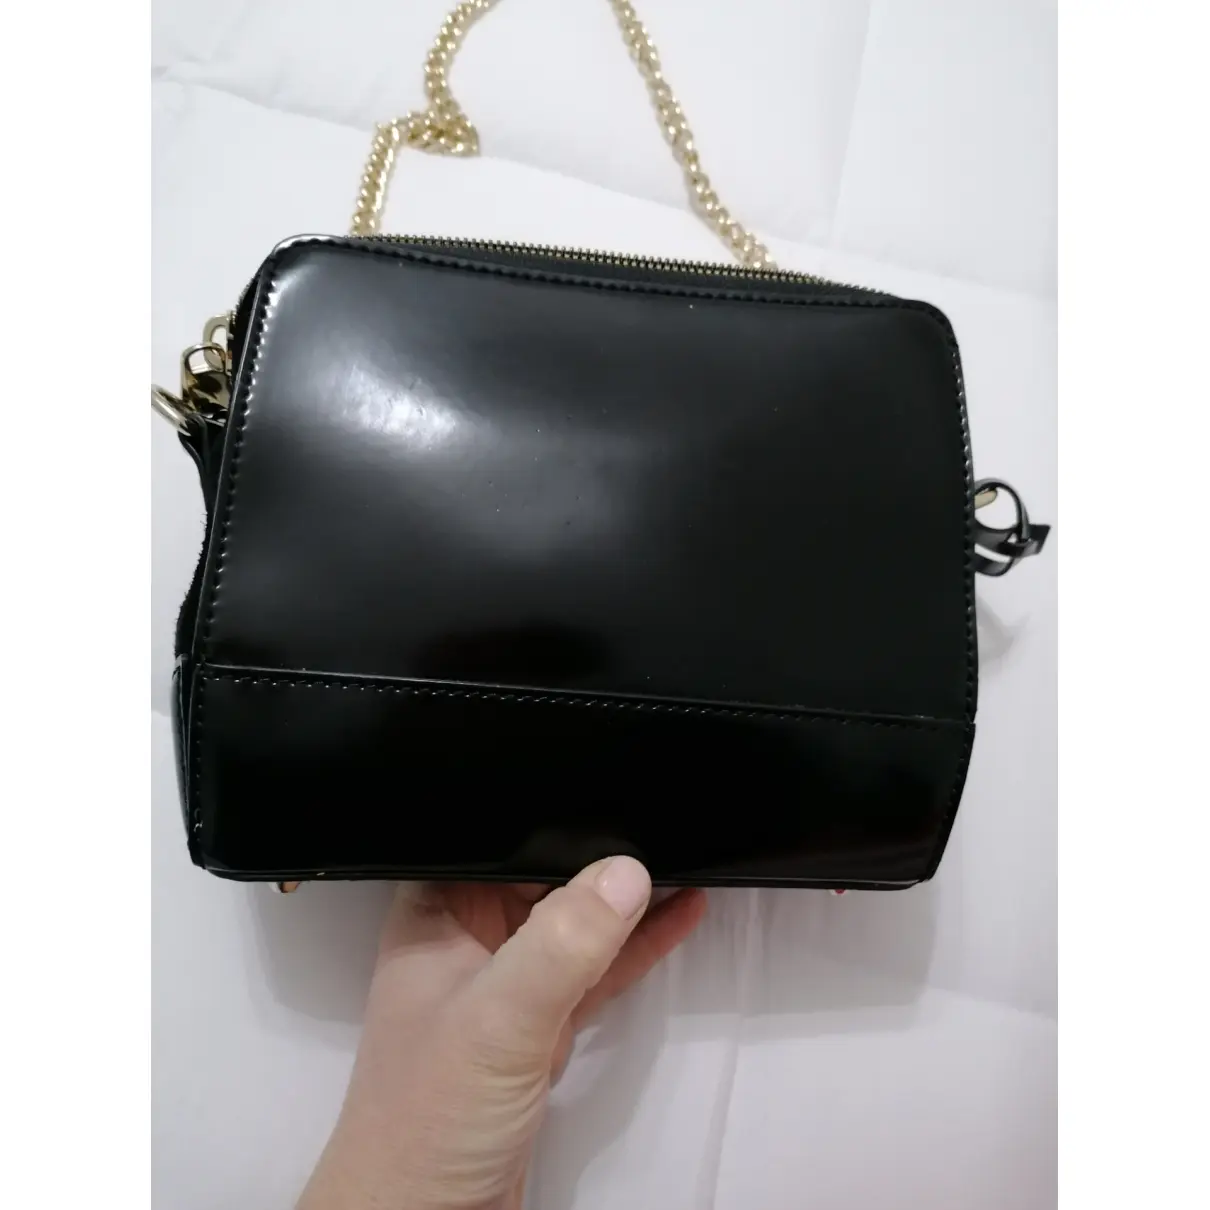 Buy Cromia Vegan leather clutch bag online